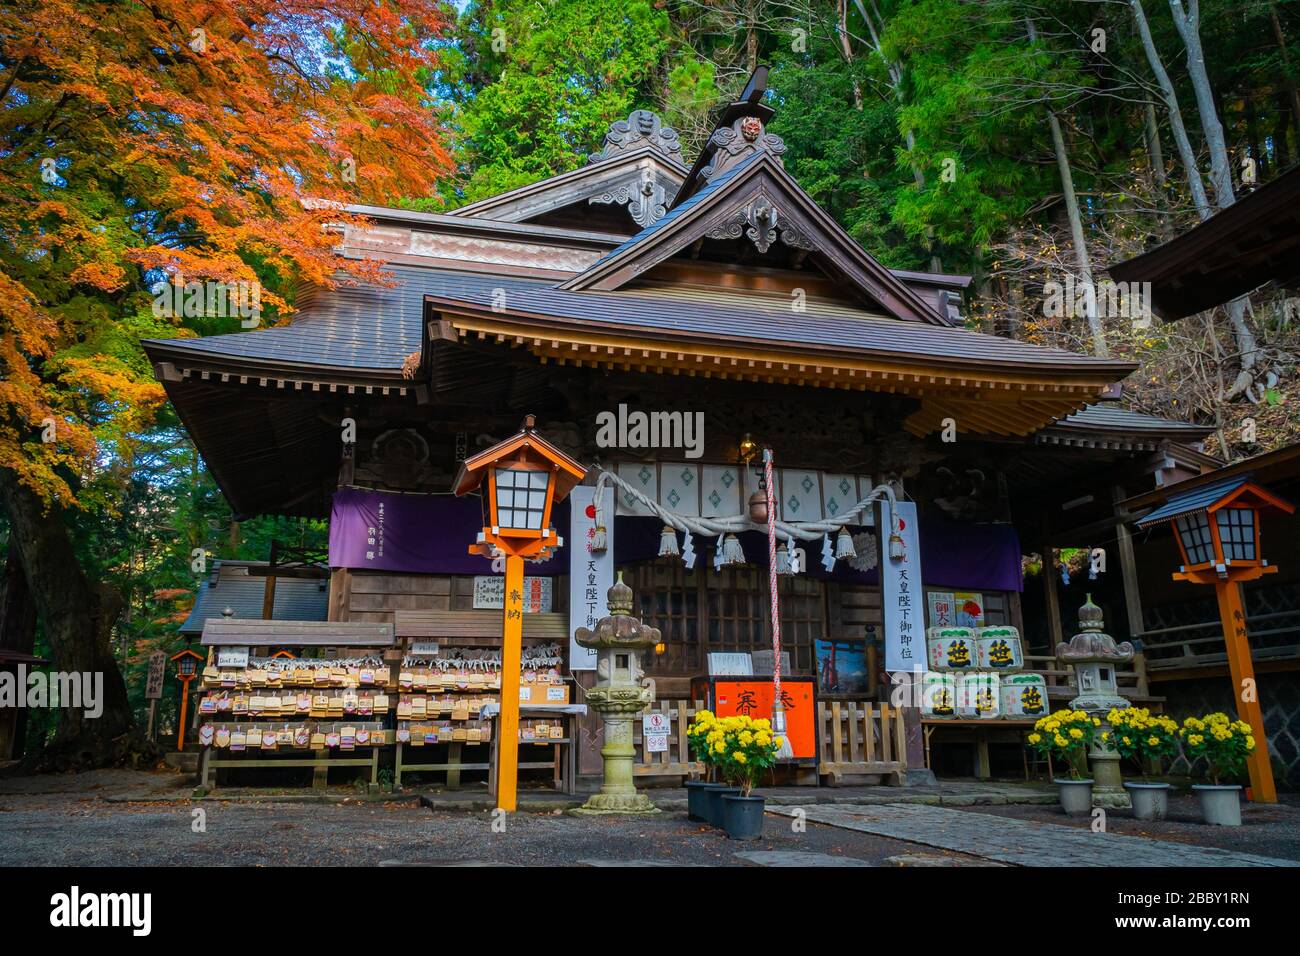 FUJIYOSHIDA, YAMANASHI. JAPAN - 24. NOVEMBER 2019: Arakura Fuji Sengen Jinja Schrein der berühmteste Tempel in der Nähe der Chureito-Pagode in Japan Stockfoto